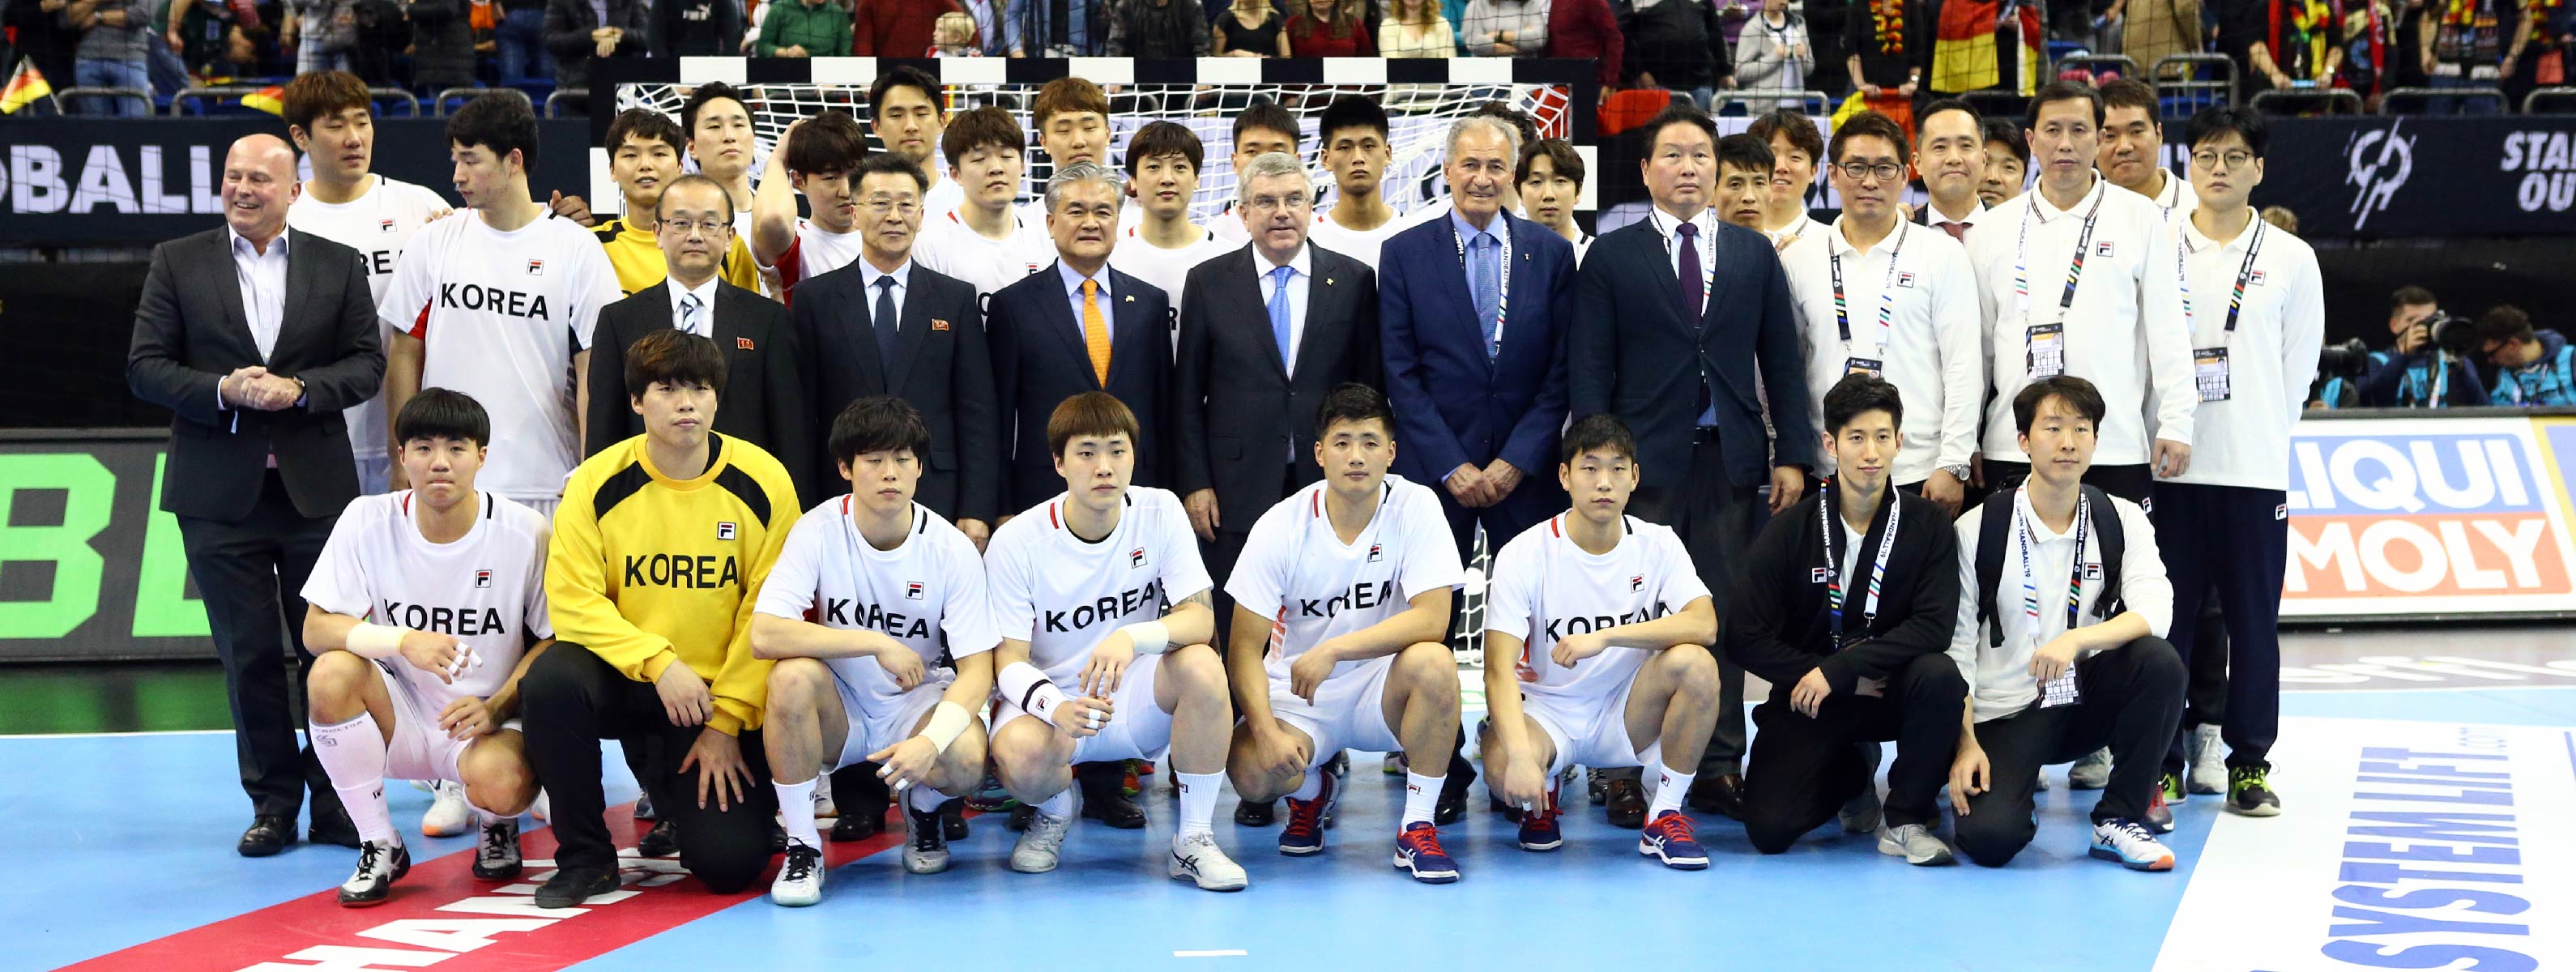 IOC President meets and congratulates Korean team at Handball World Championship 2019 - Olympic News